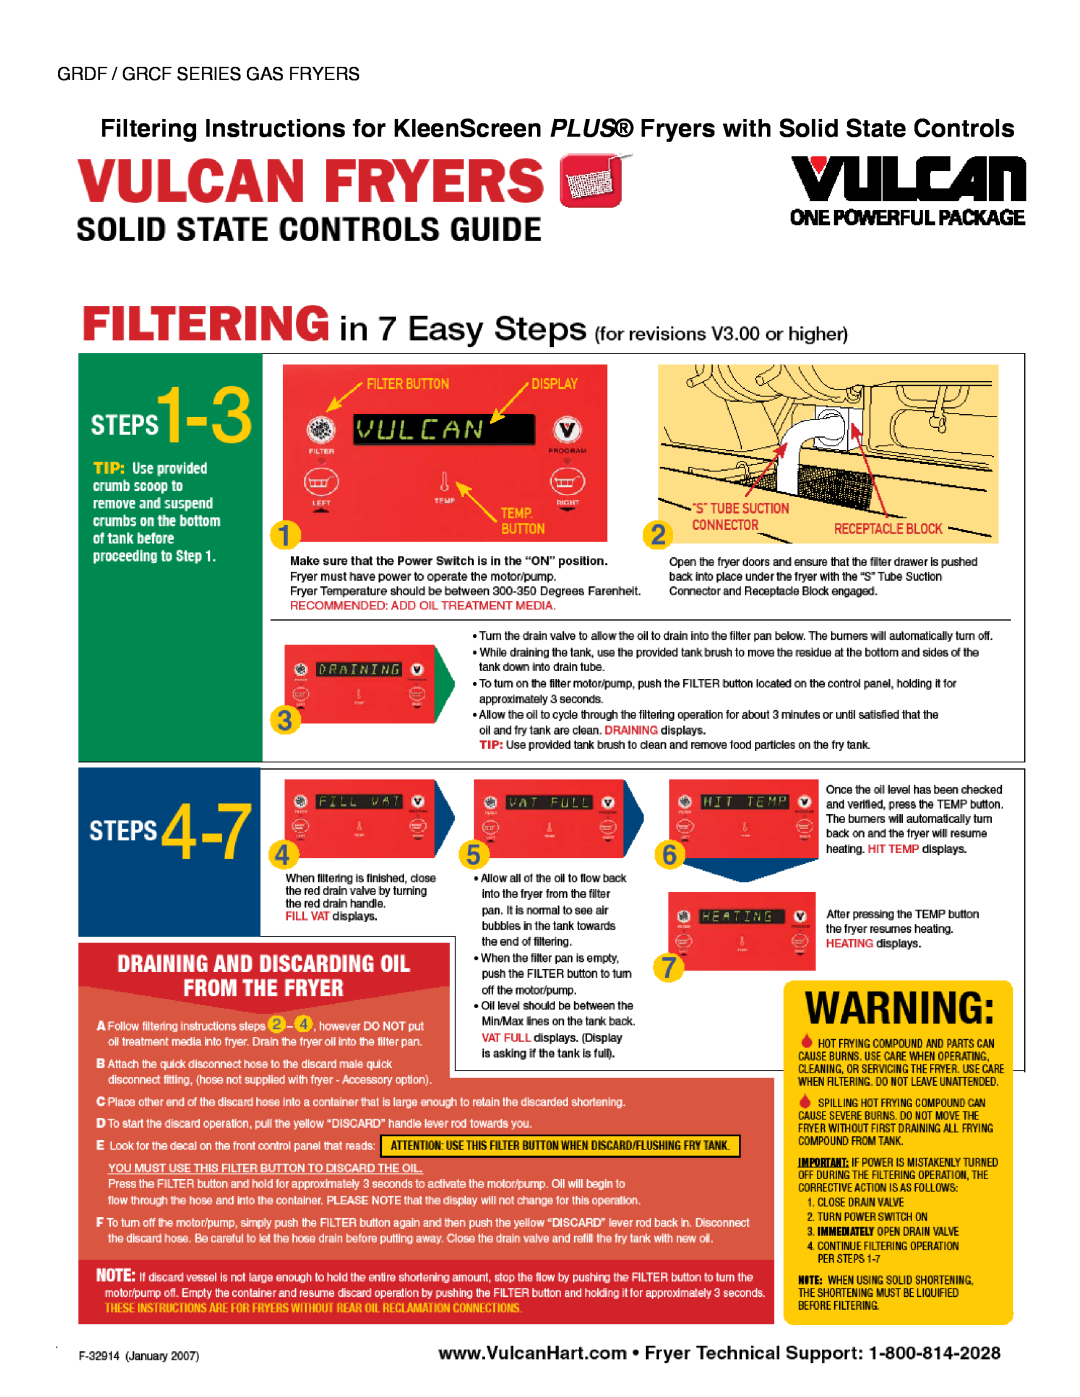 Vulcan-Hart 2XG65DF, 4GR85CF, 3GR85DF, 4GR45CF, 3GR85CF manual Grdf / Grcf Series Gas Fryers, Vulcan-Hart, F-31214 Rev. D March 